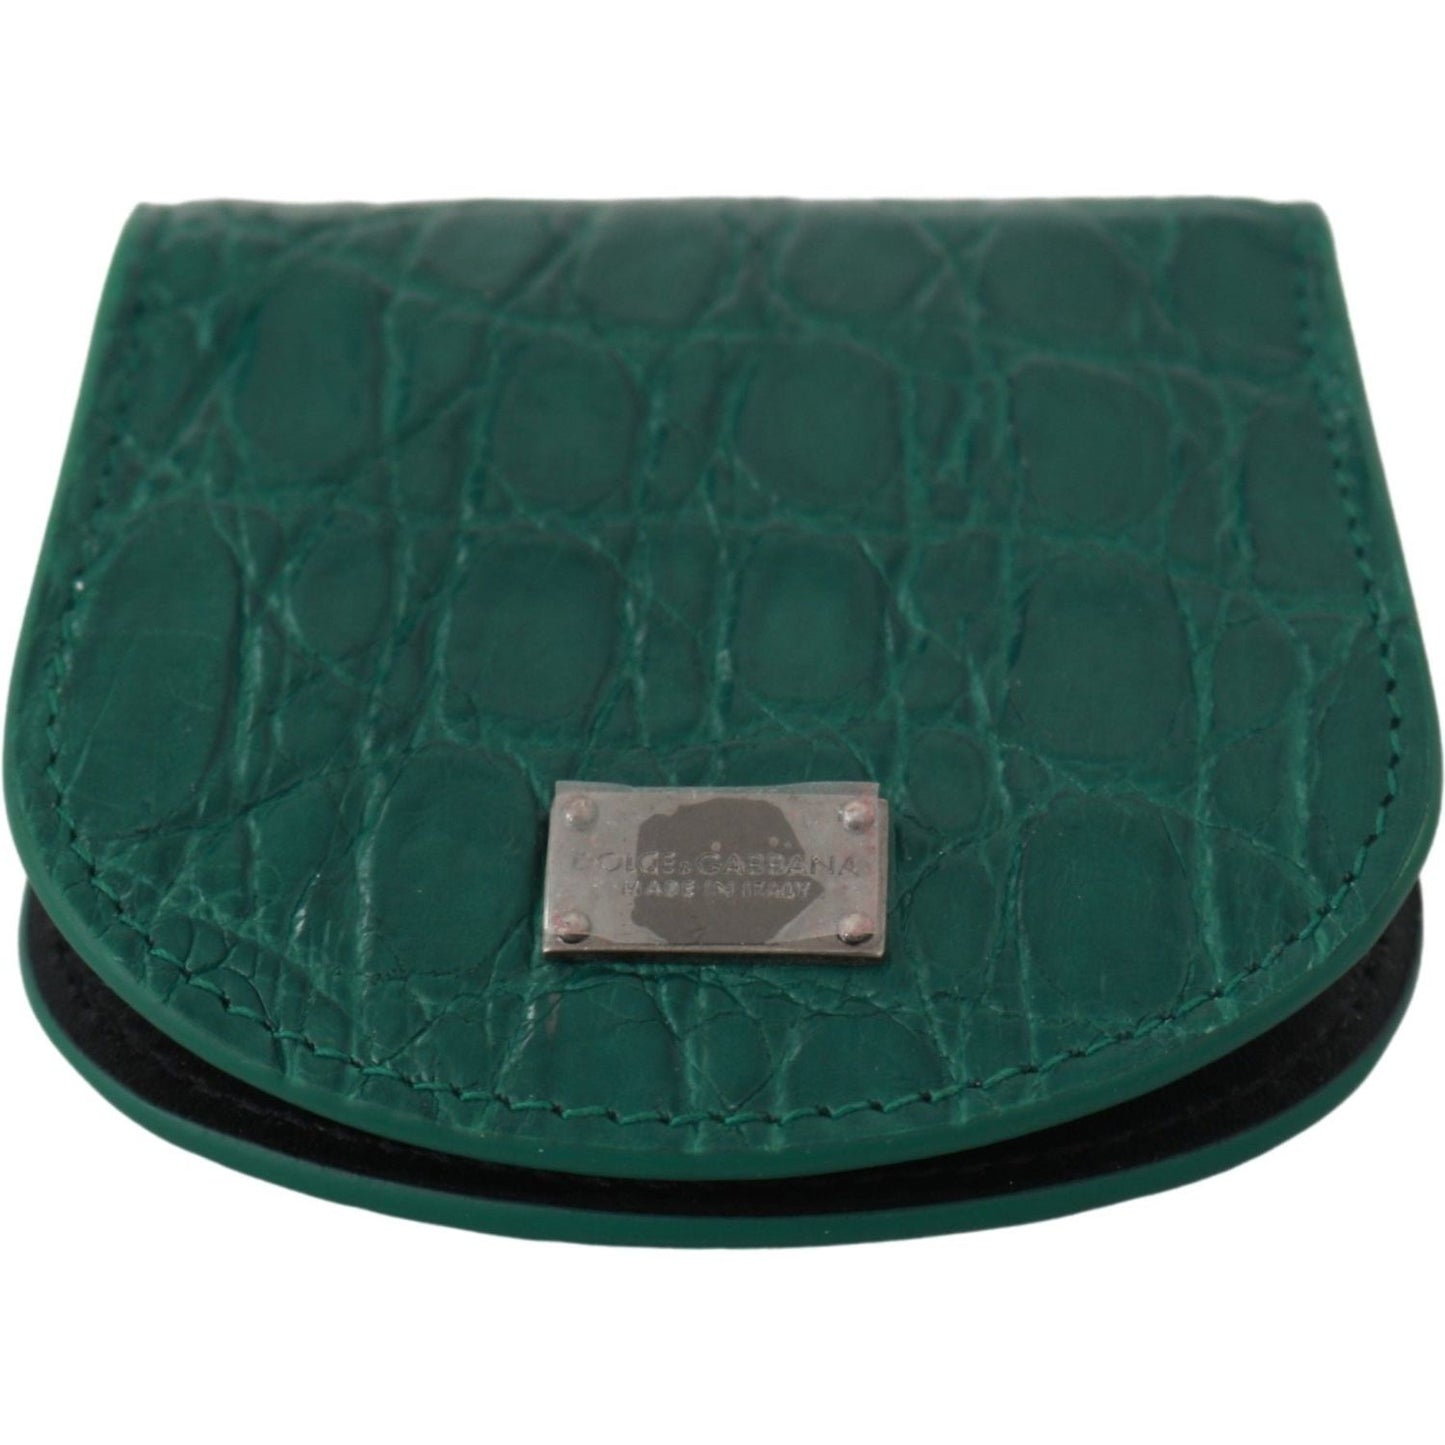 Dolce & Gabbana Exquisite Exotic Skin Coin Case Wallet green-exotic-skins-condom-case-holder-wallet Condom Case IMG_0223-1-06109baa-2ab.jpg